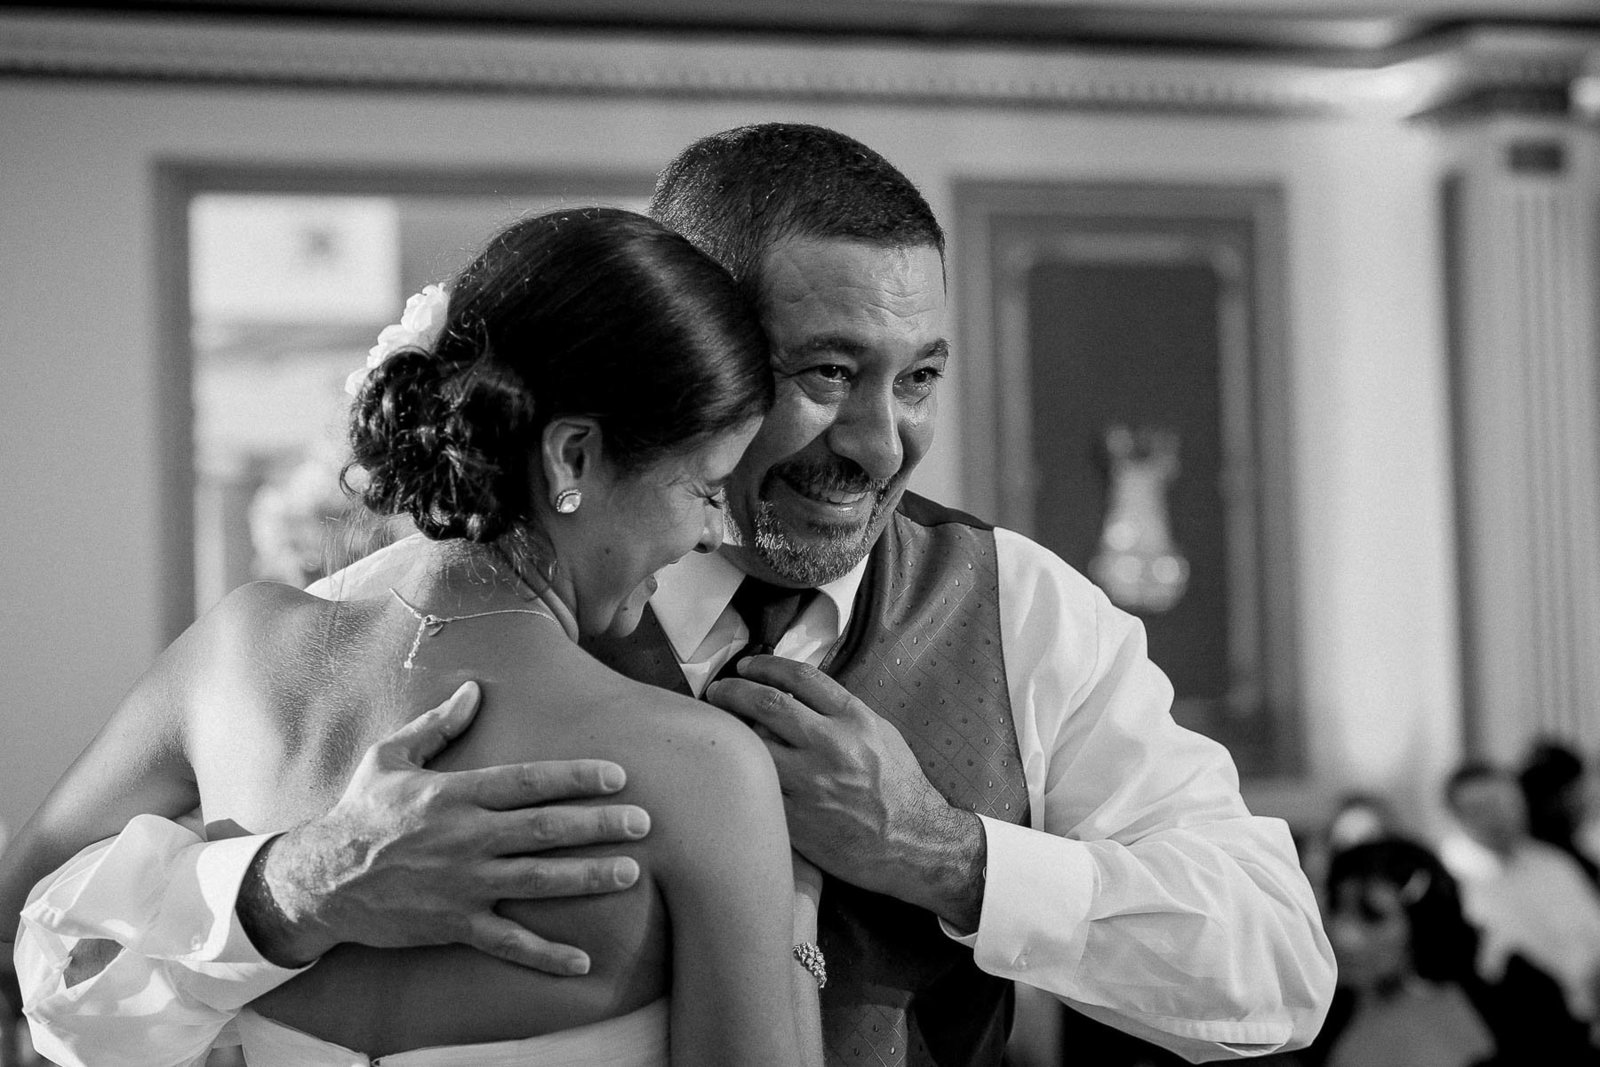 Bride dances with father, Mendenhall Inn, Kennett Square, Pennsylvania